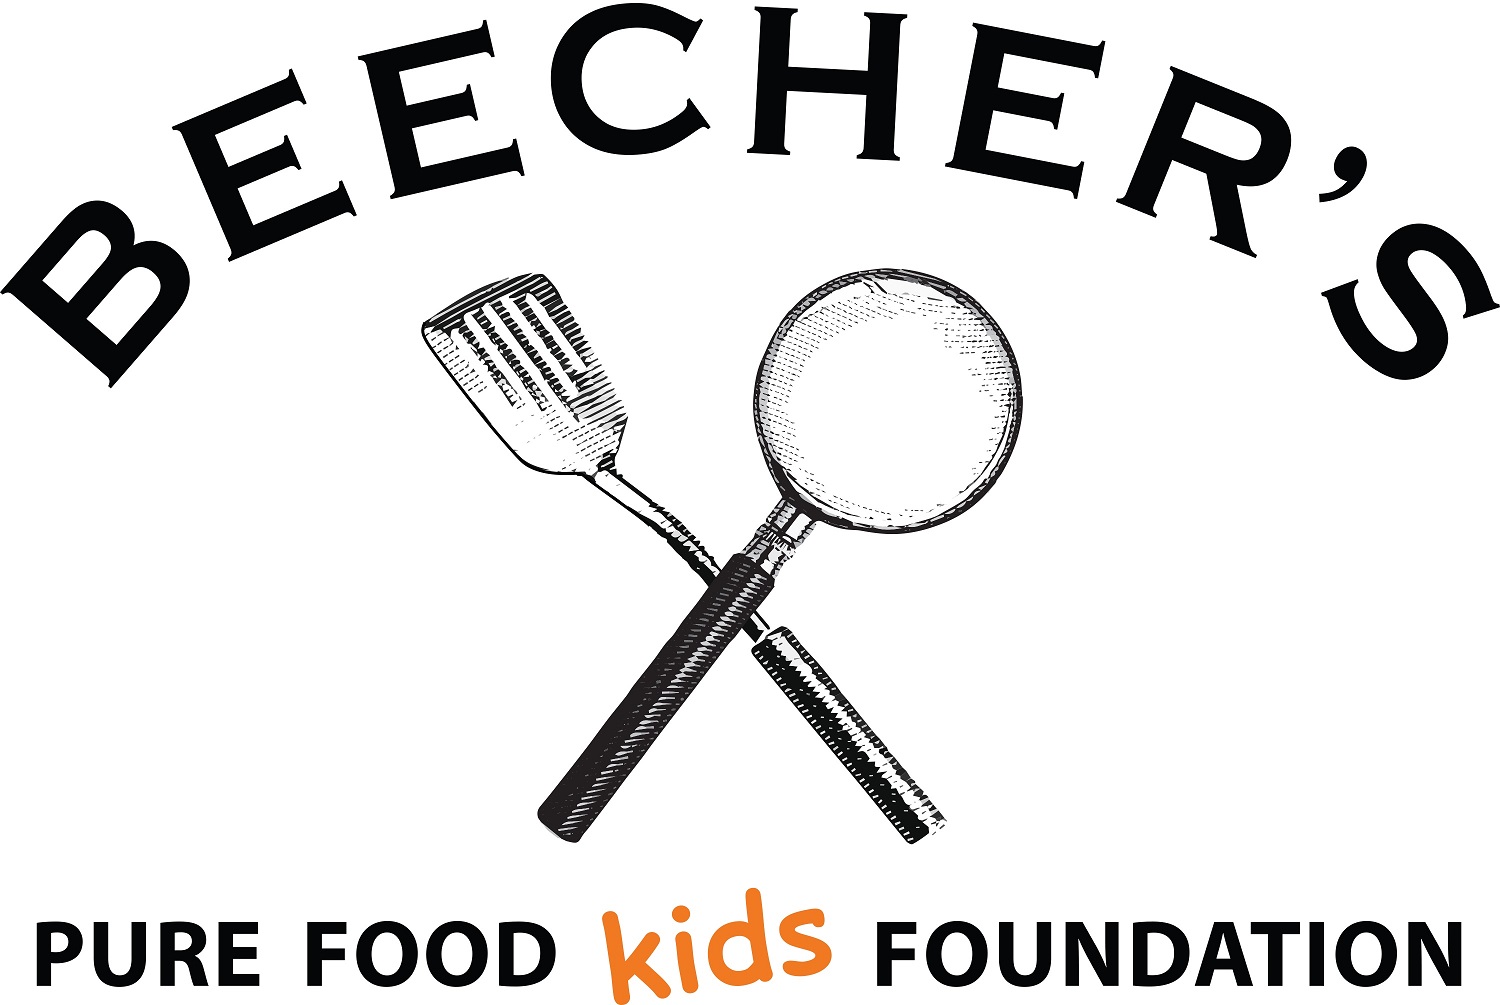 Jonathan Saturay, Beecher’s Pure Food Kids Foundation